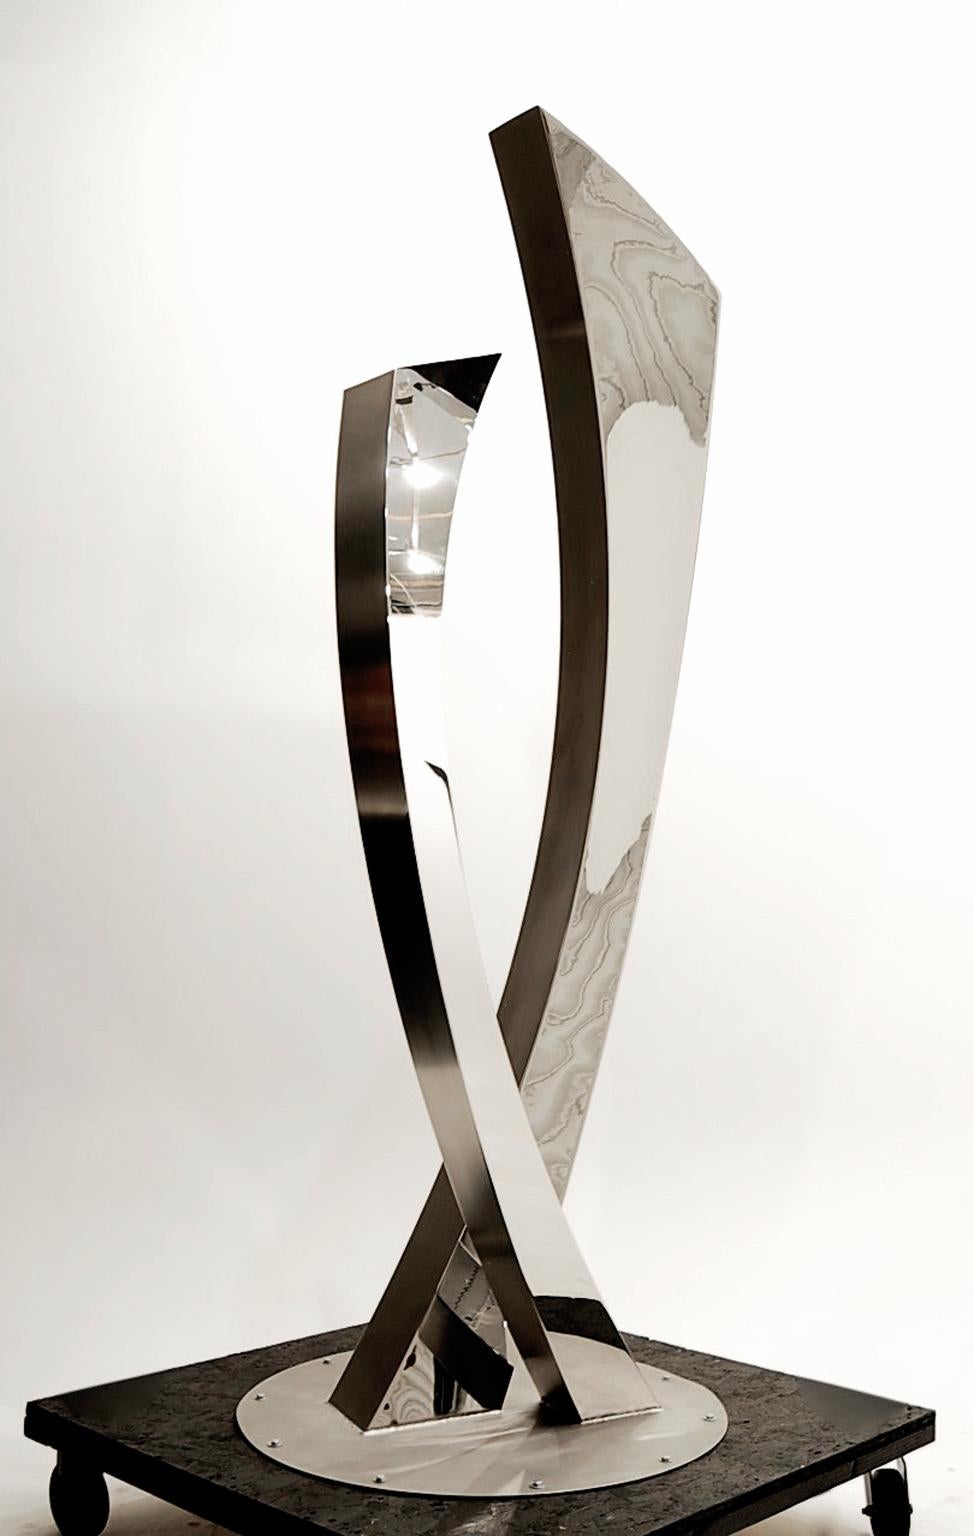 Abstract Sculpture Thomas Ramey - « Emerging », grande sculpture abstraite minimaliste en acier inoxydable poli